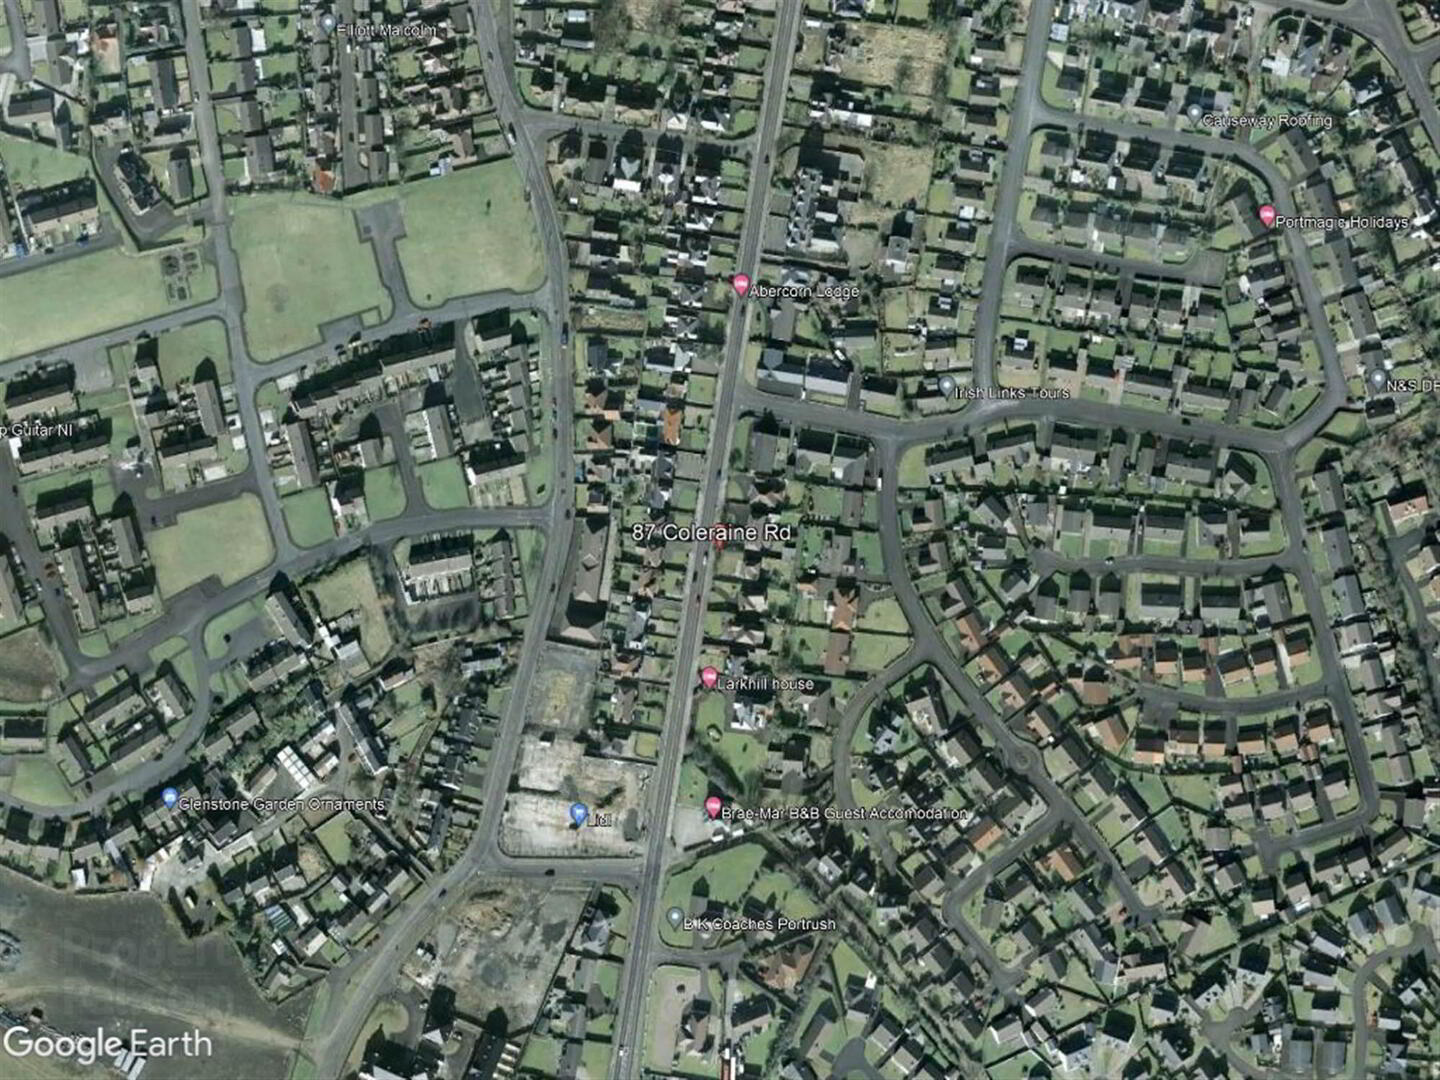 Semi-Detached Dwellings At, 87 Coleraine Road ( Site 2)